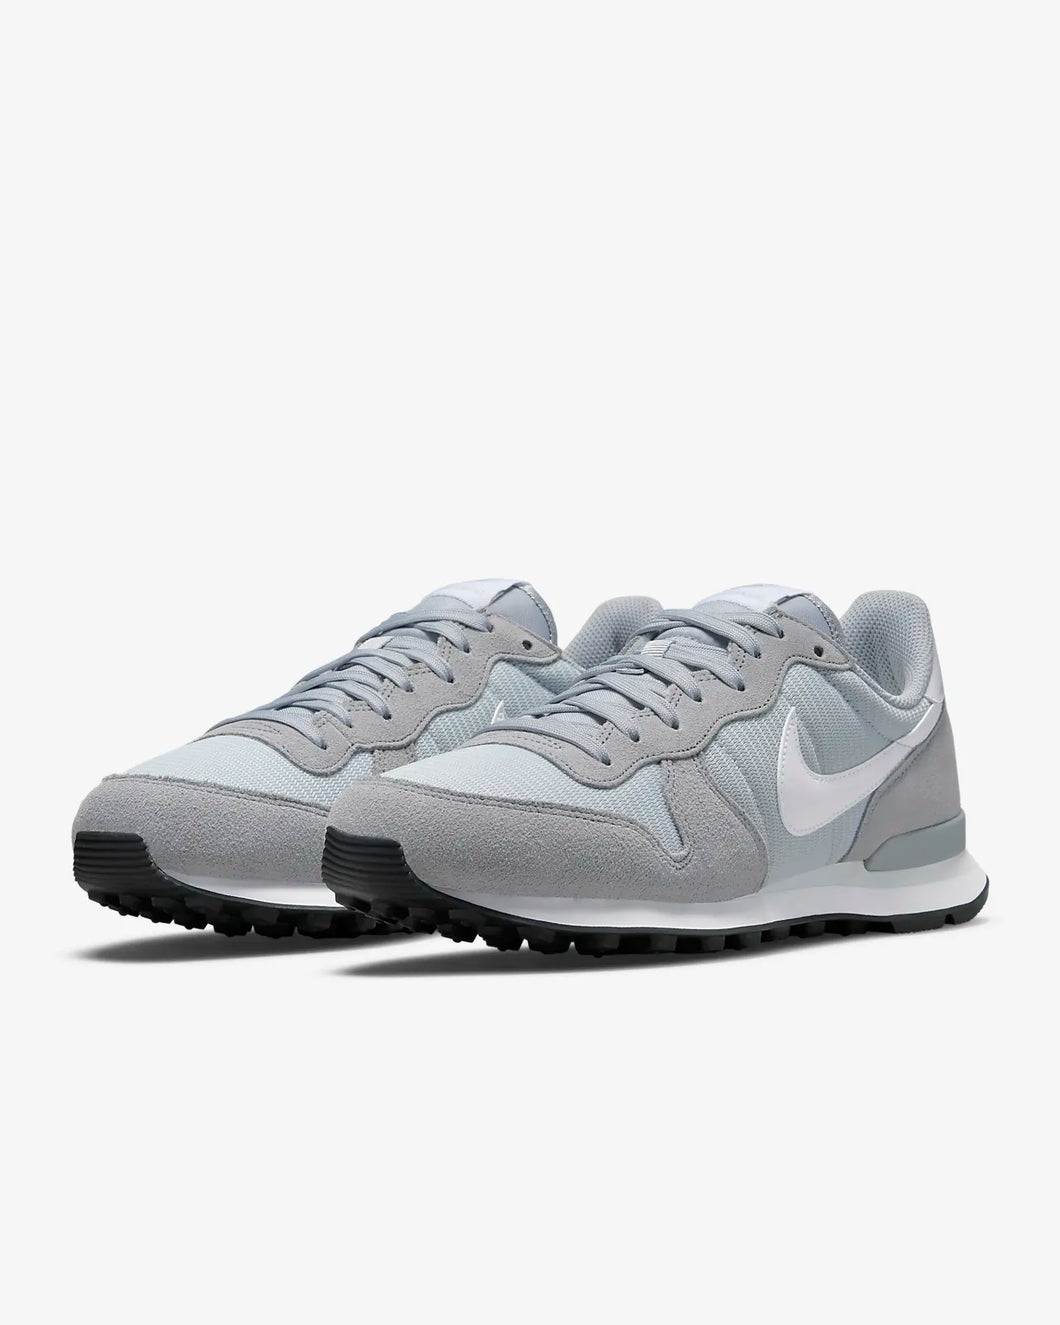 Nike Internationalist grey white DR7886-002